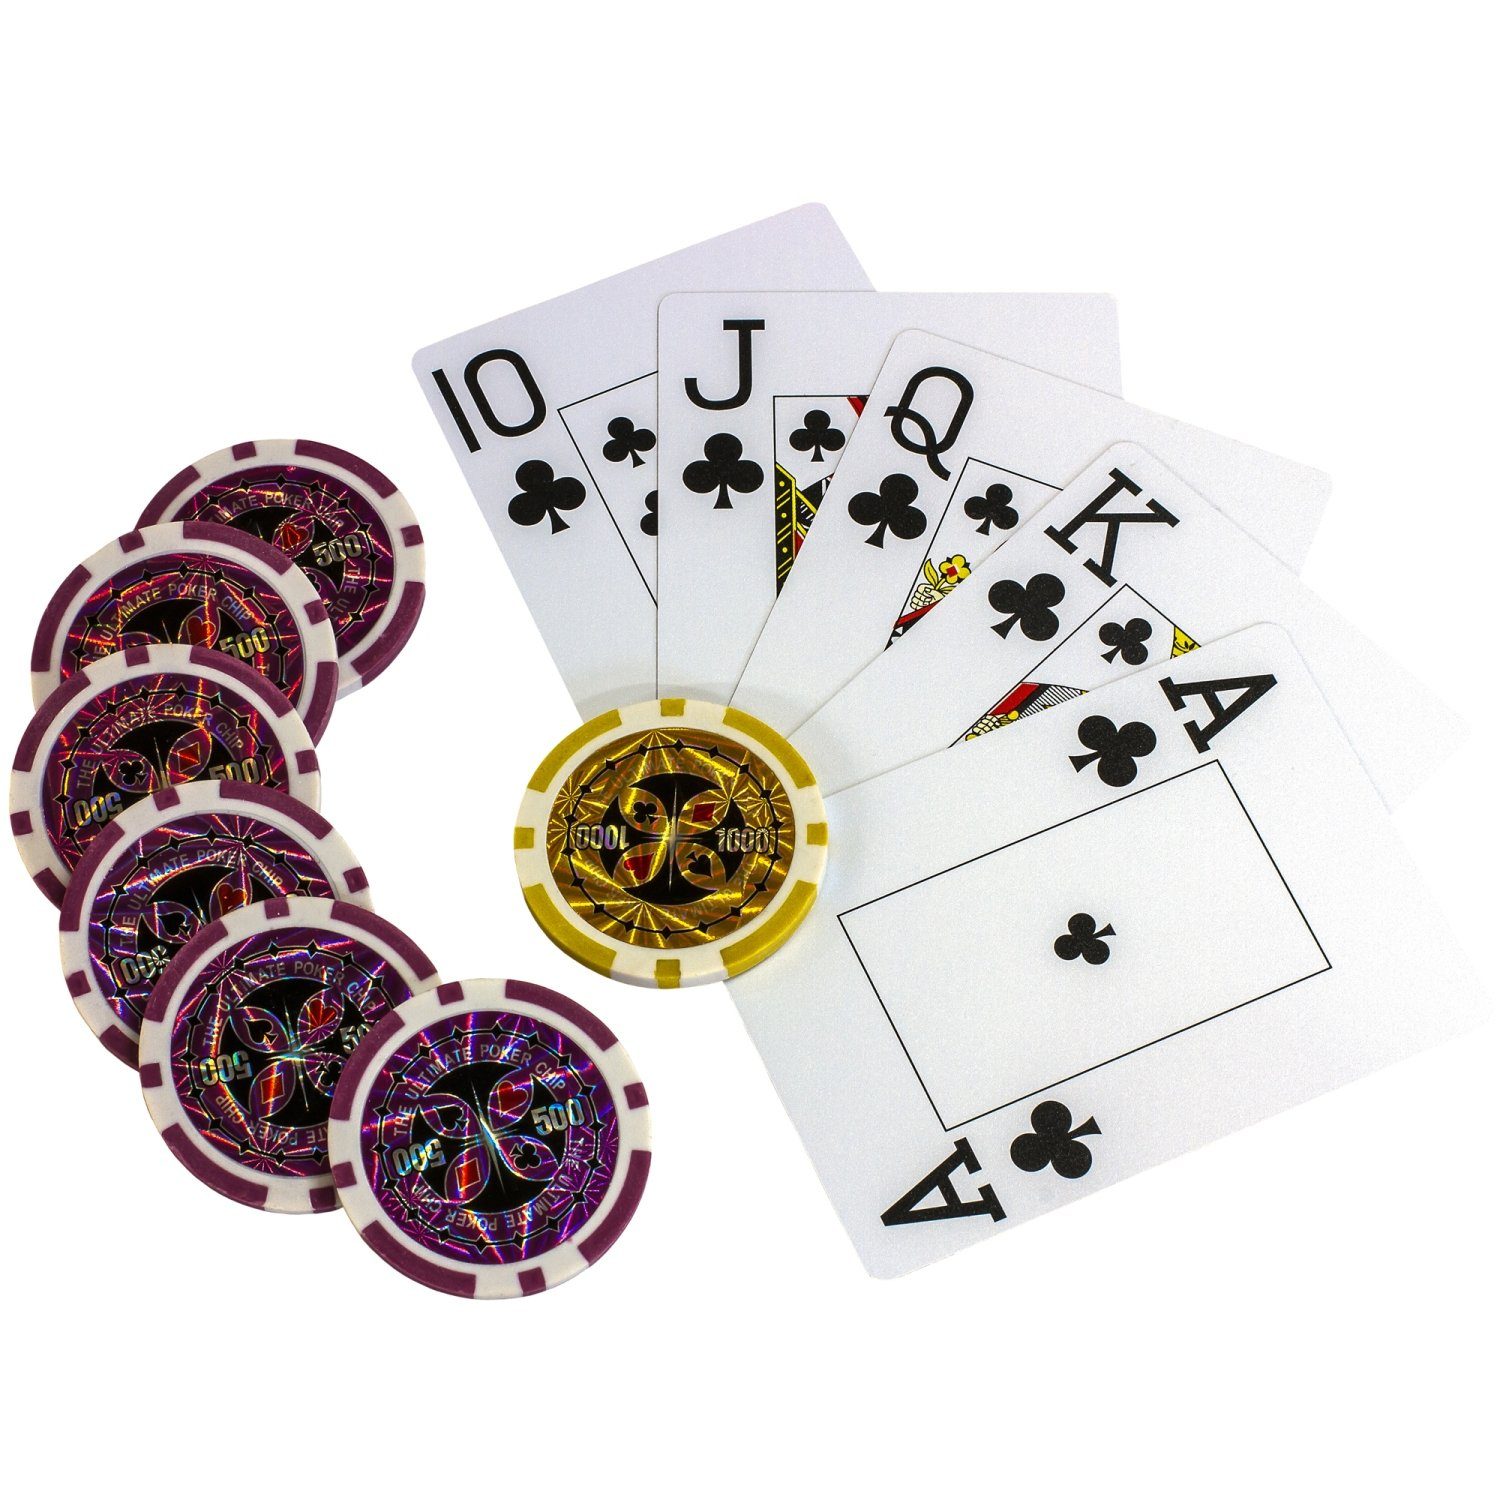 PLANET Set, 300er Set, Pokerset Deluxe, GAMES 600er Spiel, od. Pokerchips, Glücksspiel Pokerkoffer, Poker Ultimate Pro-Poker-Set,